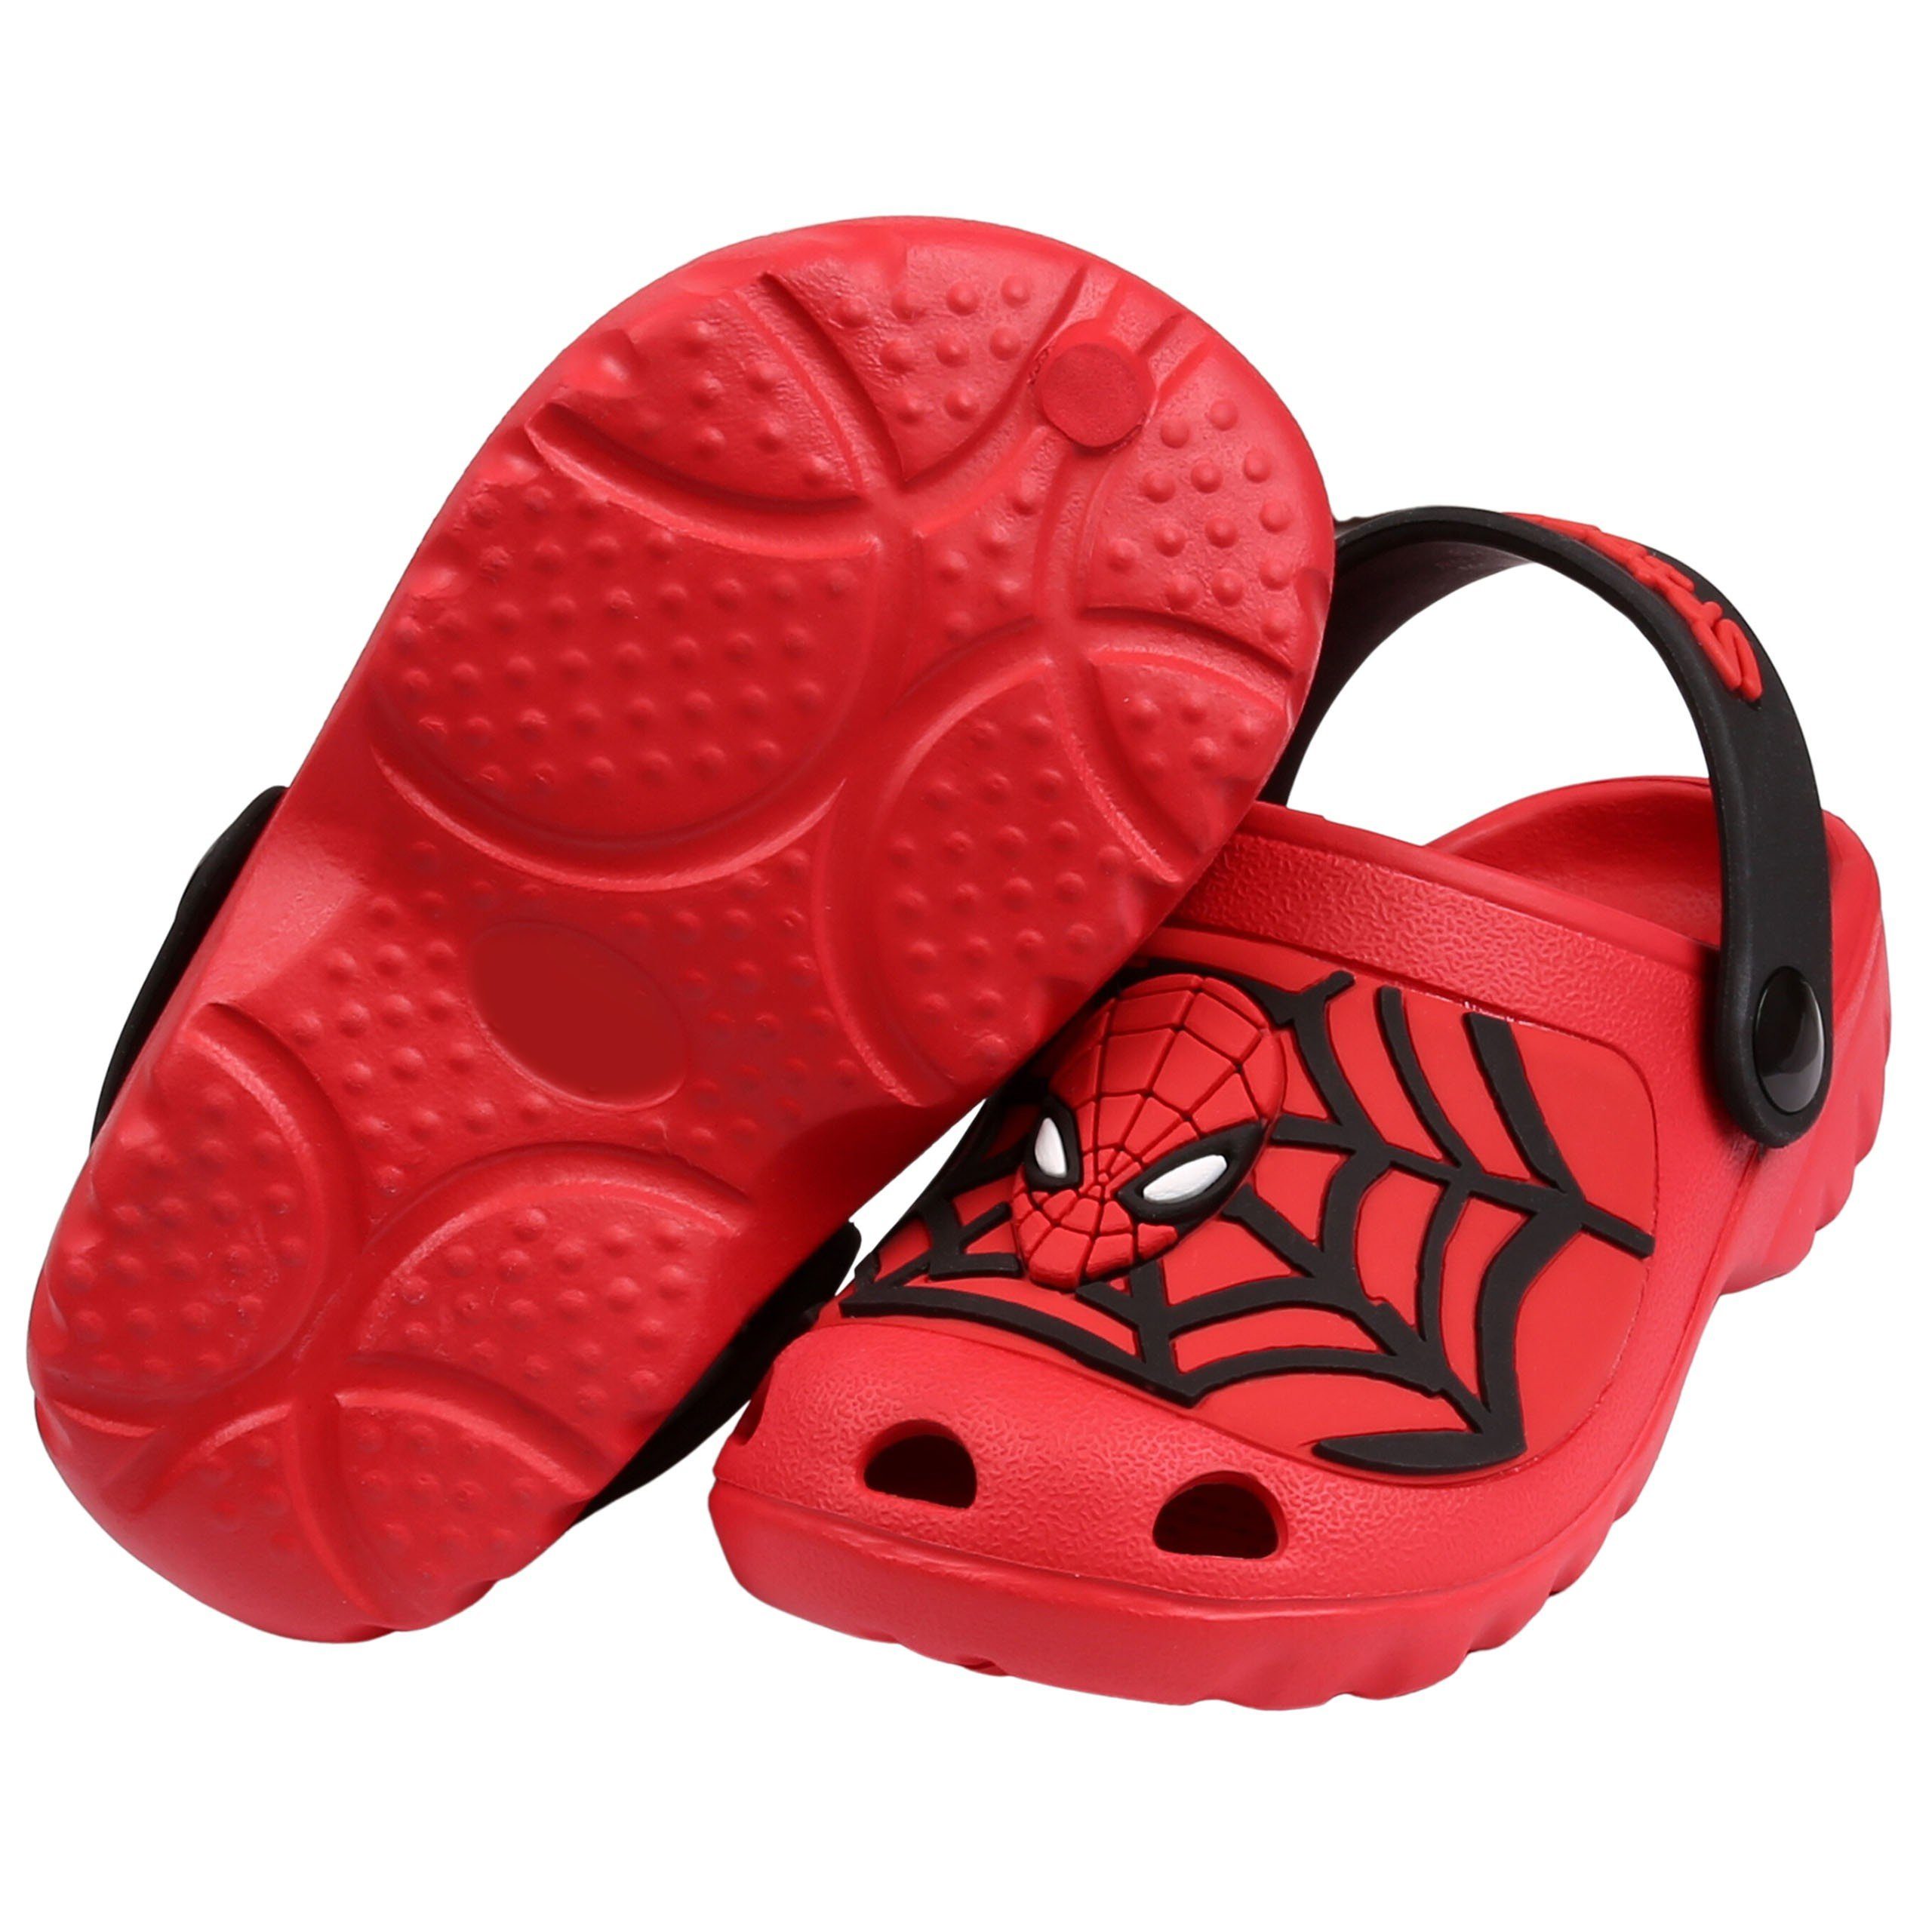 SpiderMan Badelatschen/Crocs rote Badeschuh Kinder für Sarcia.eu